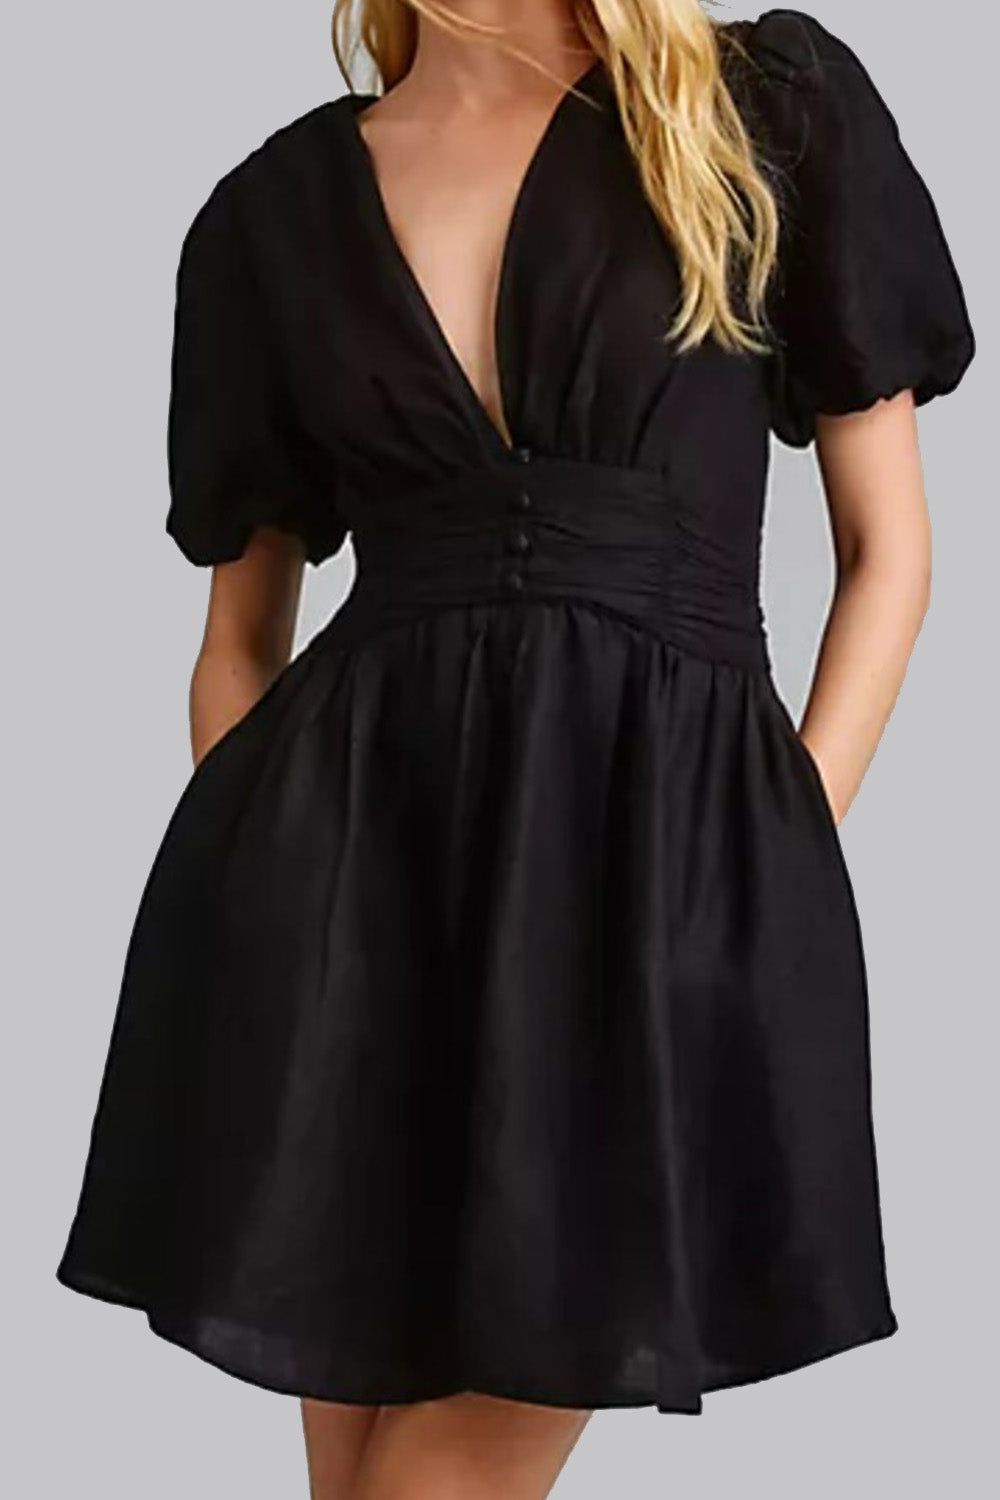 Ornate Black Dress